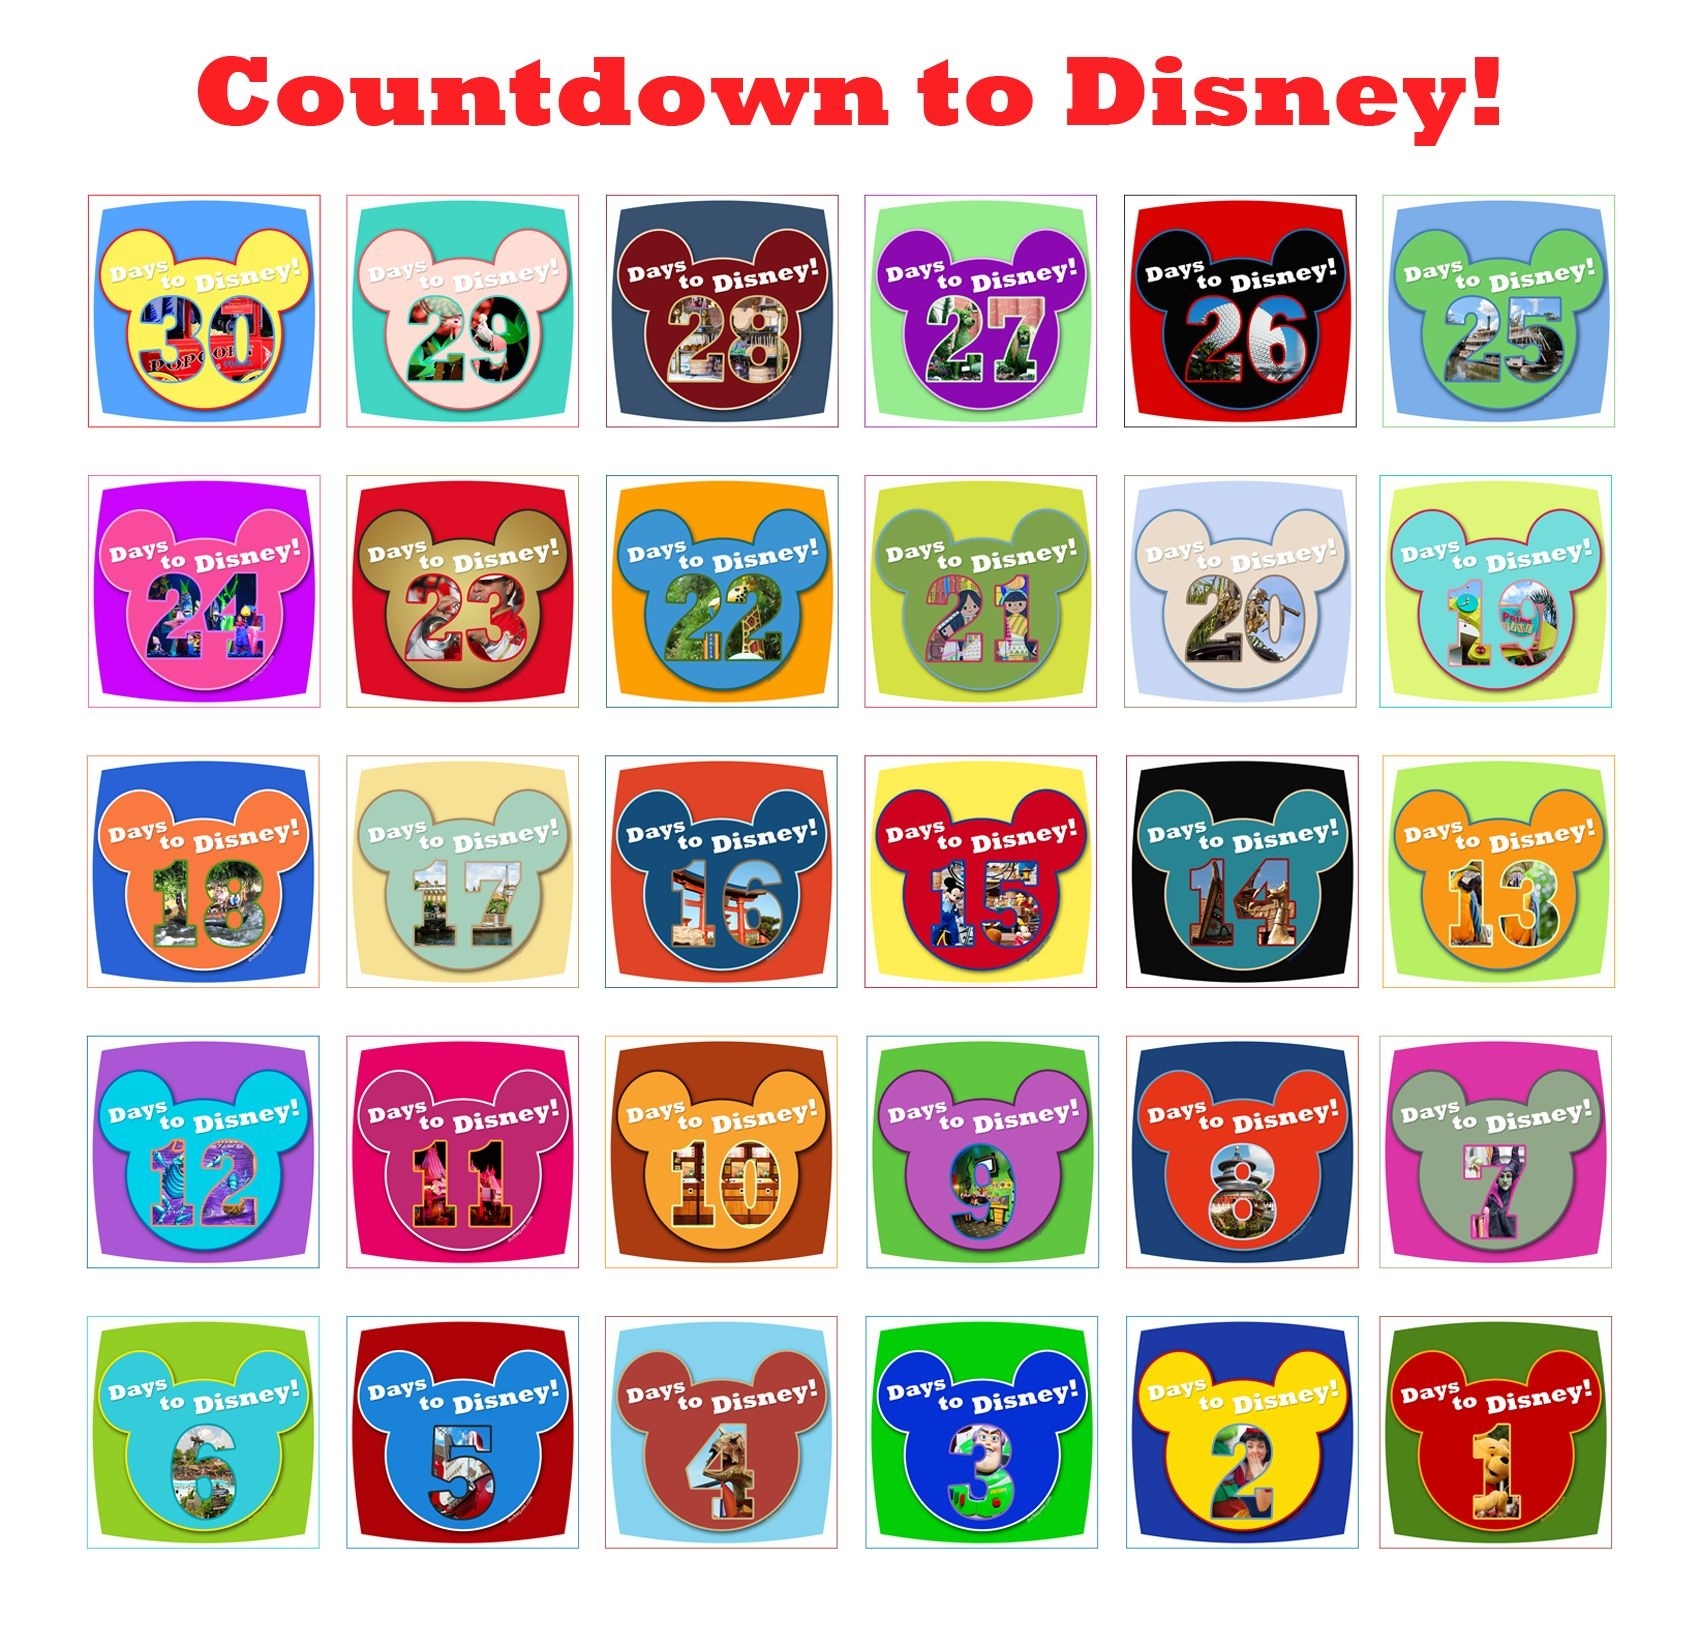 Countdown Calendar Grid - The Official Blog Of David&#039;s Perky Disney Vacation Club Countdown Calendar